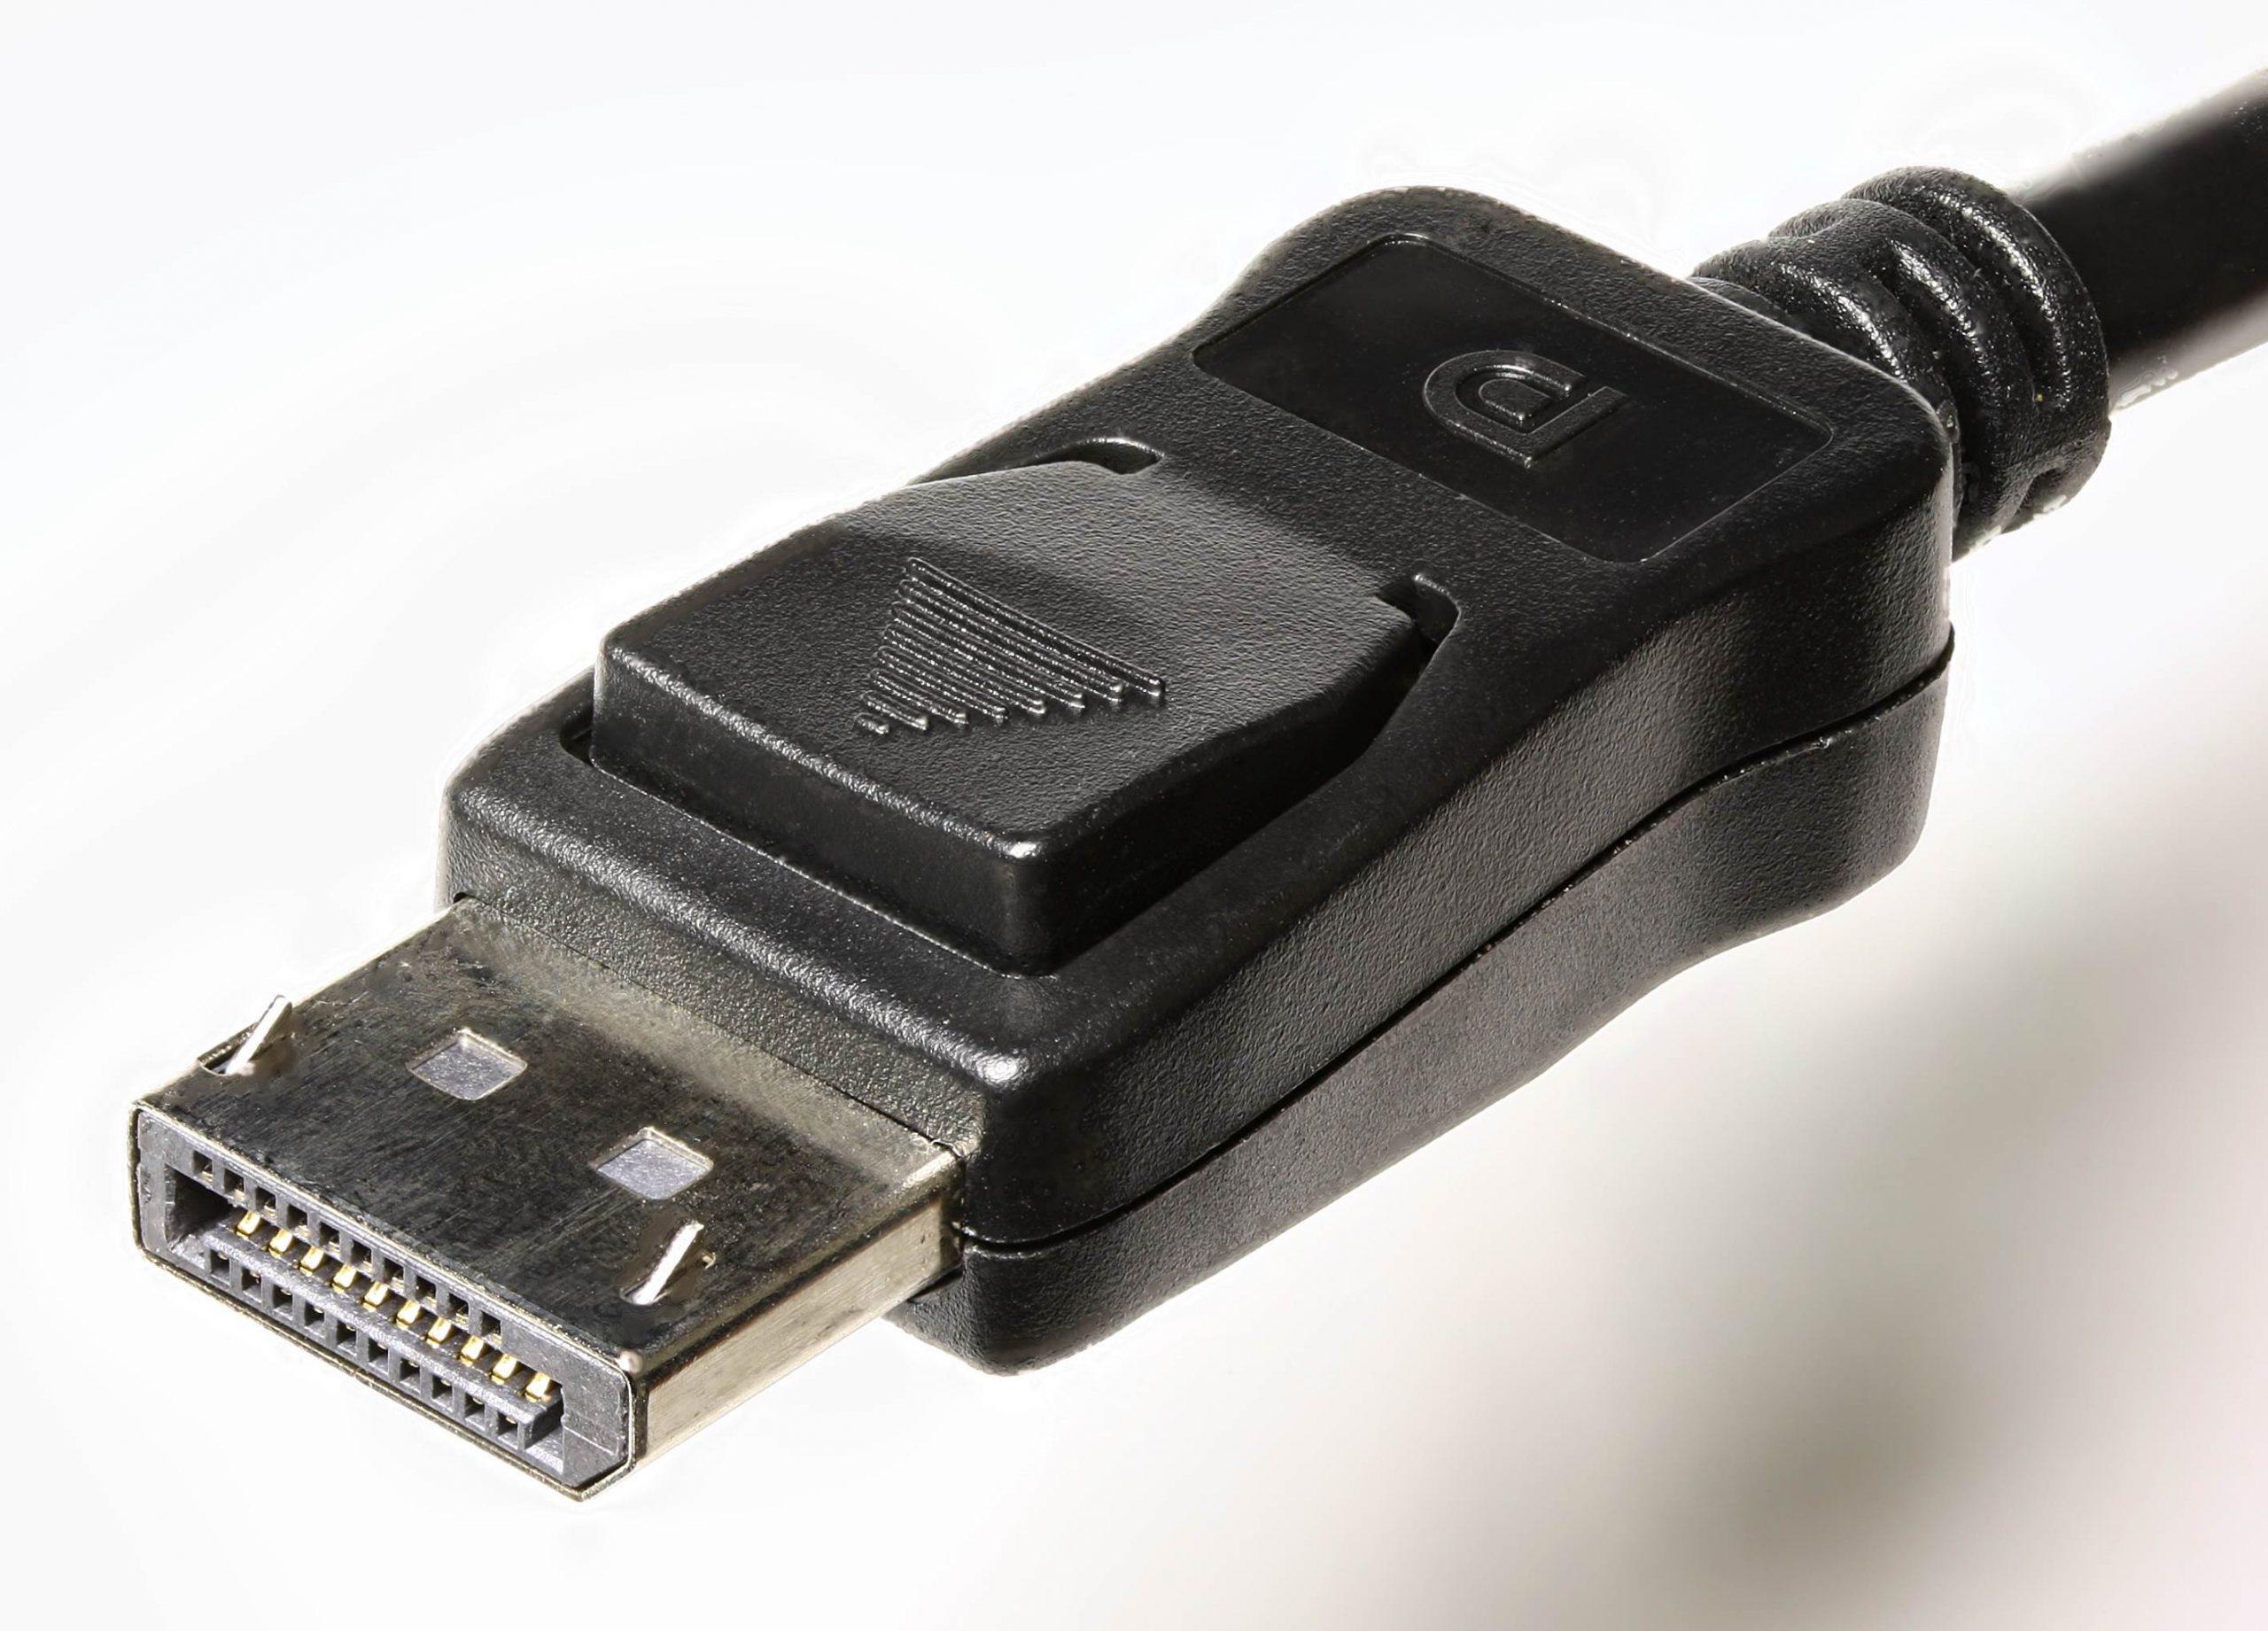 DisplayPort connector